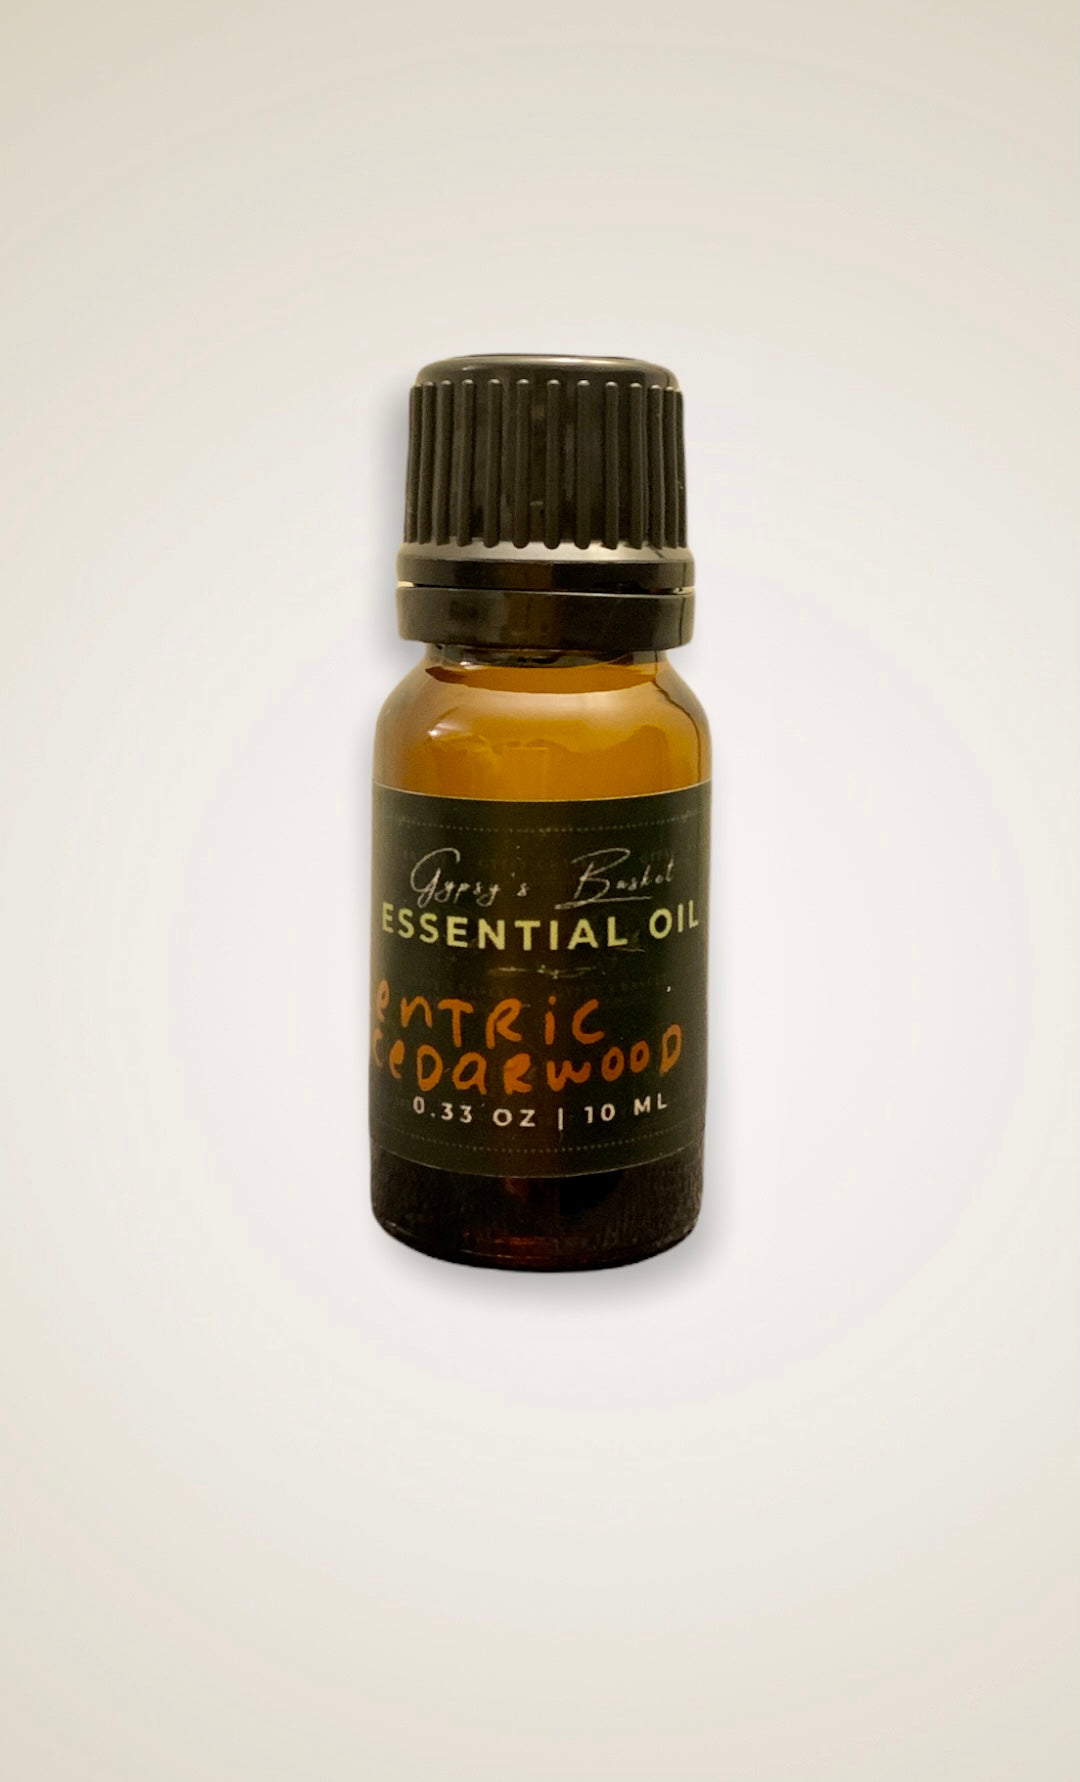 Centric Cedarwood Essential Oil